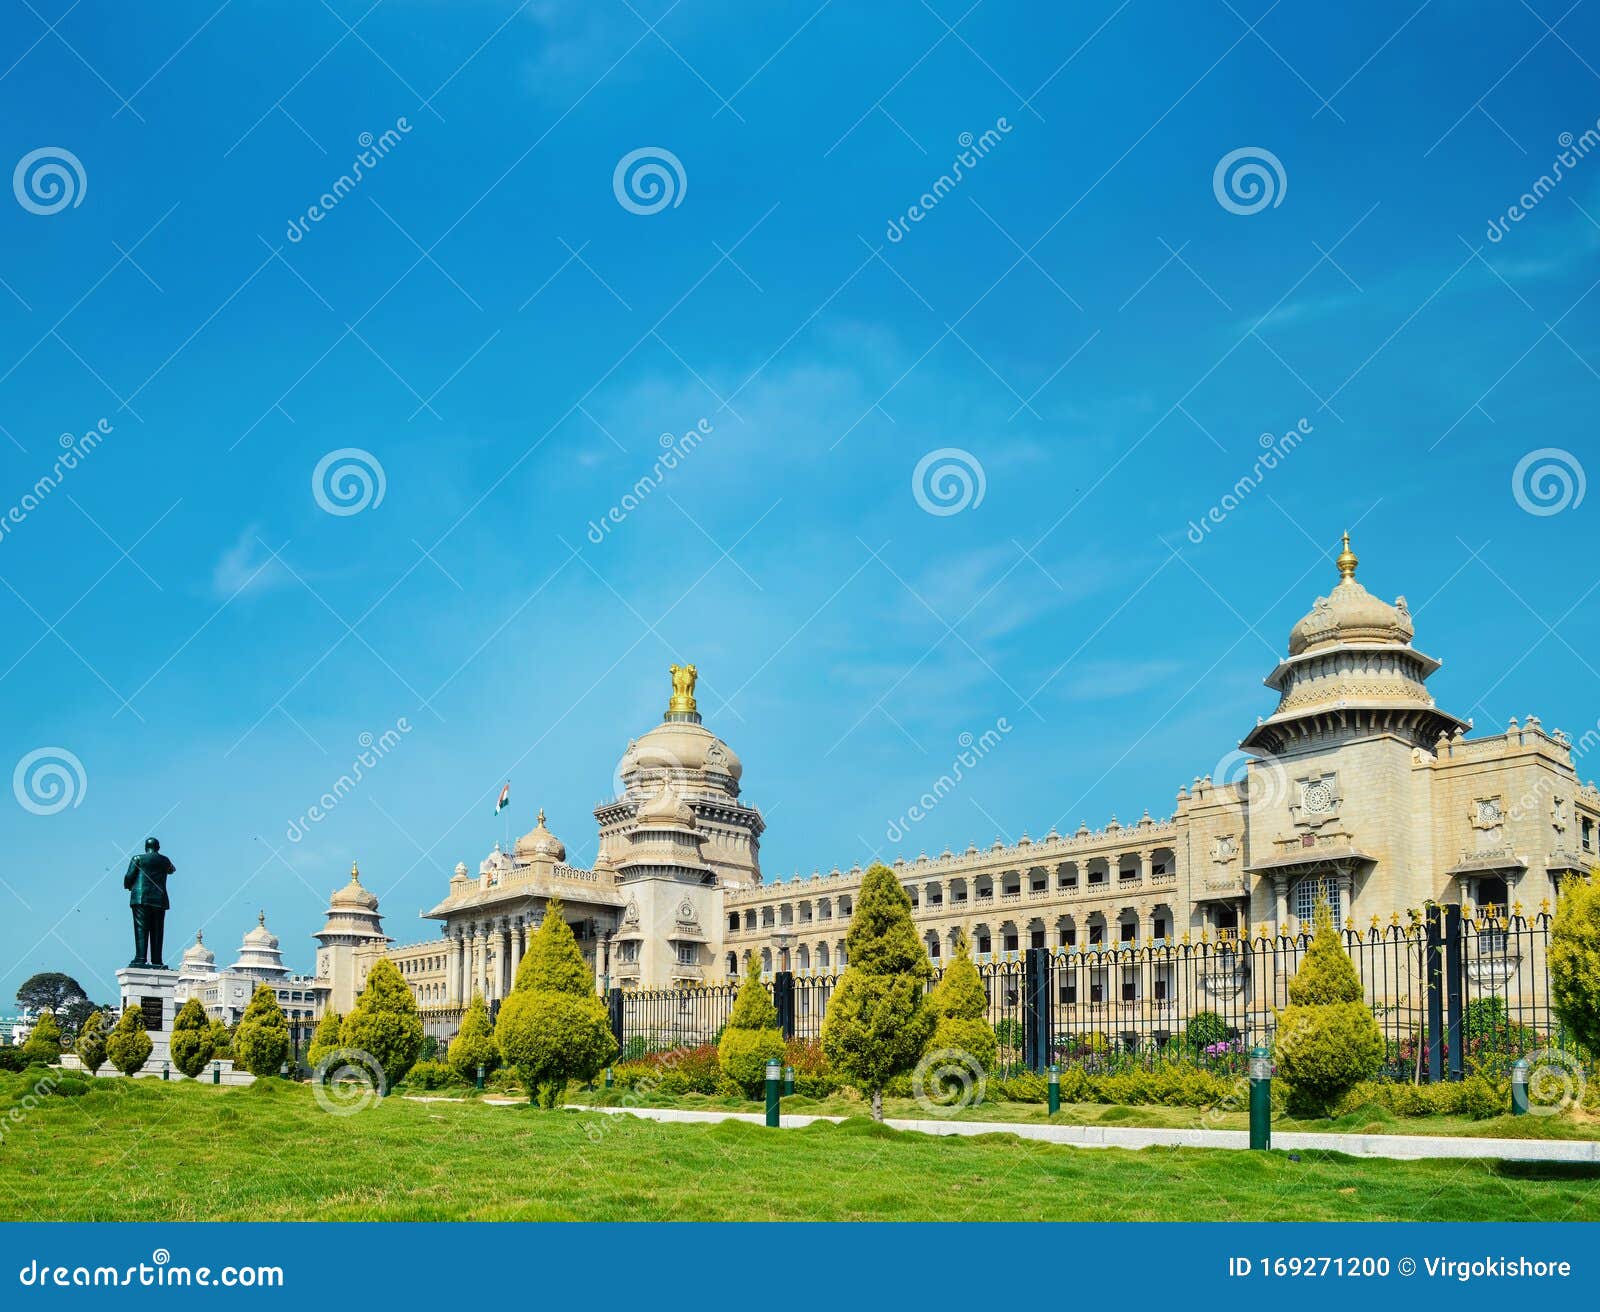 the vidhana soudha located in bangalore, is the seat of the state legislature of karnataka